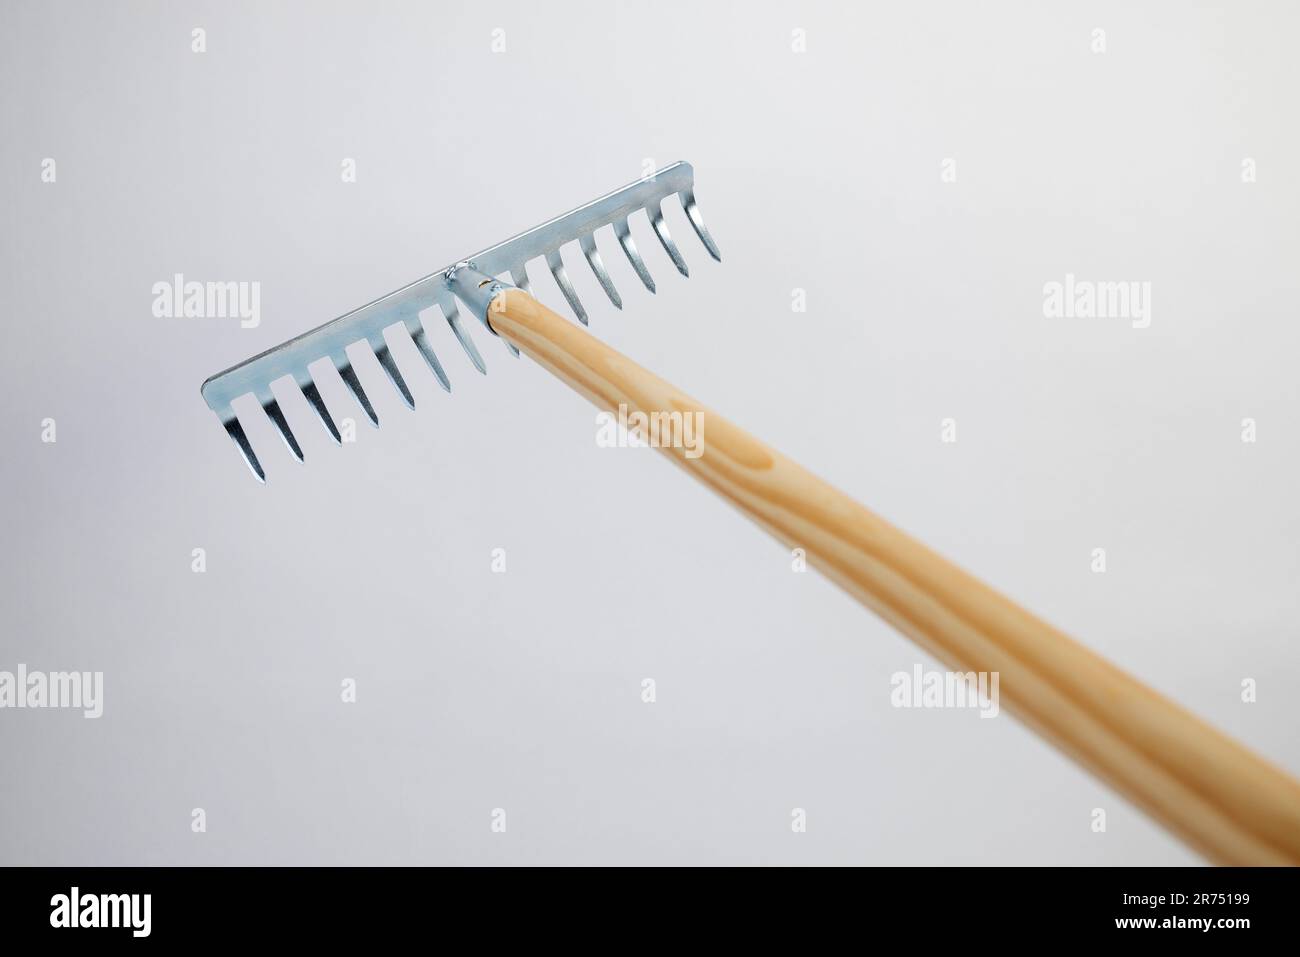 Garden rake, with wooden handle, silver galvanized tines, detail, white background, Stock Photo